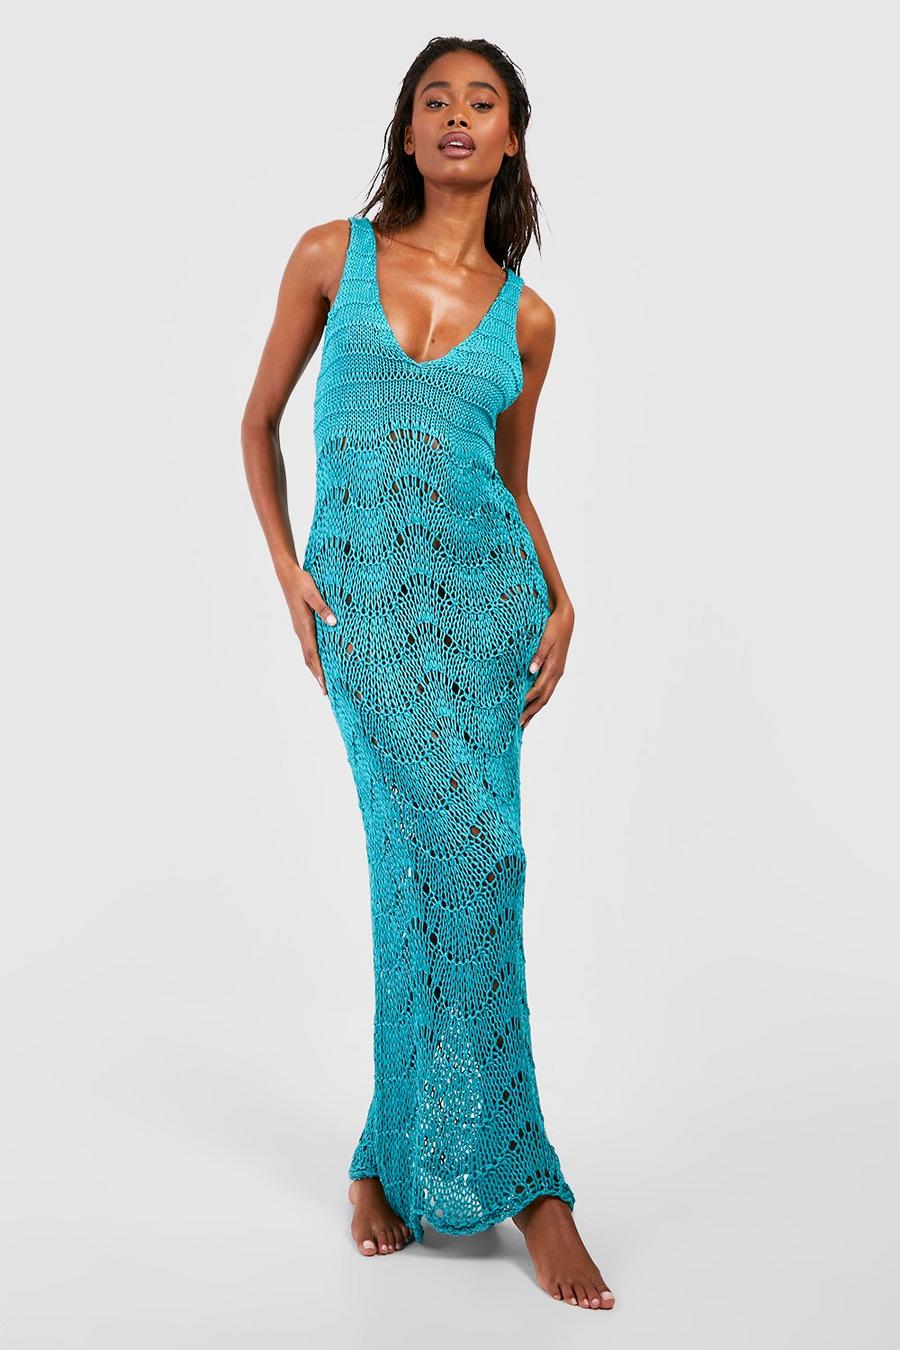 Aqua Crochet Scallop Scoop Beach Dress